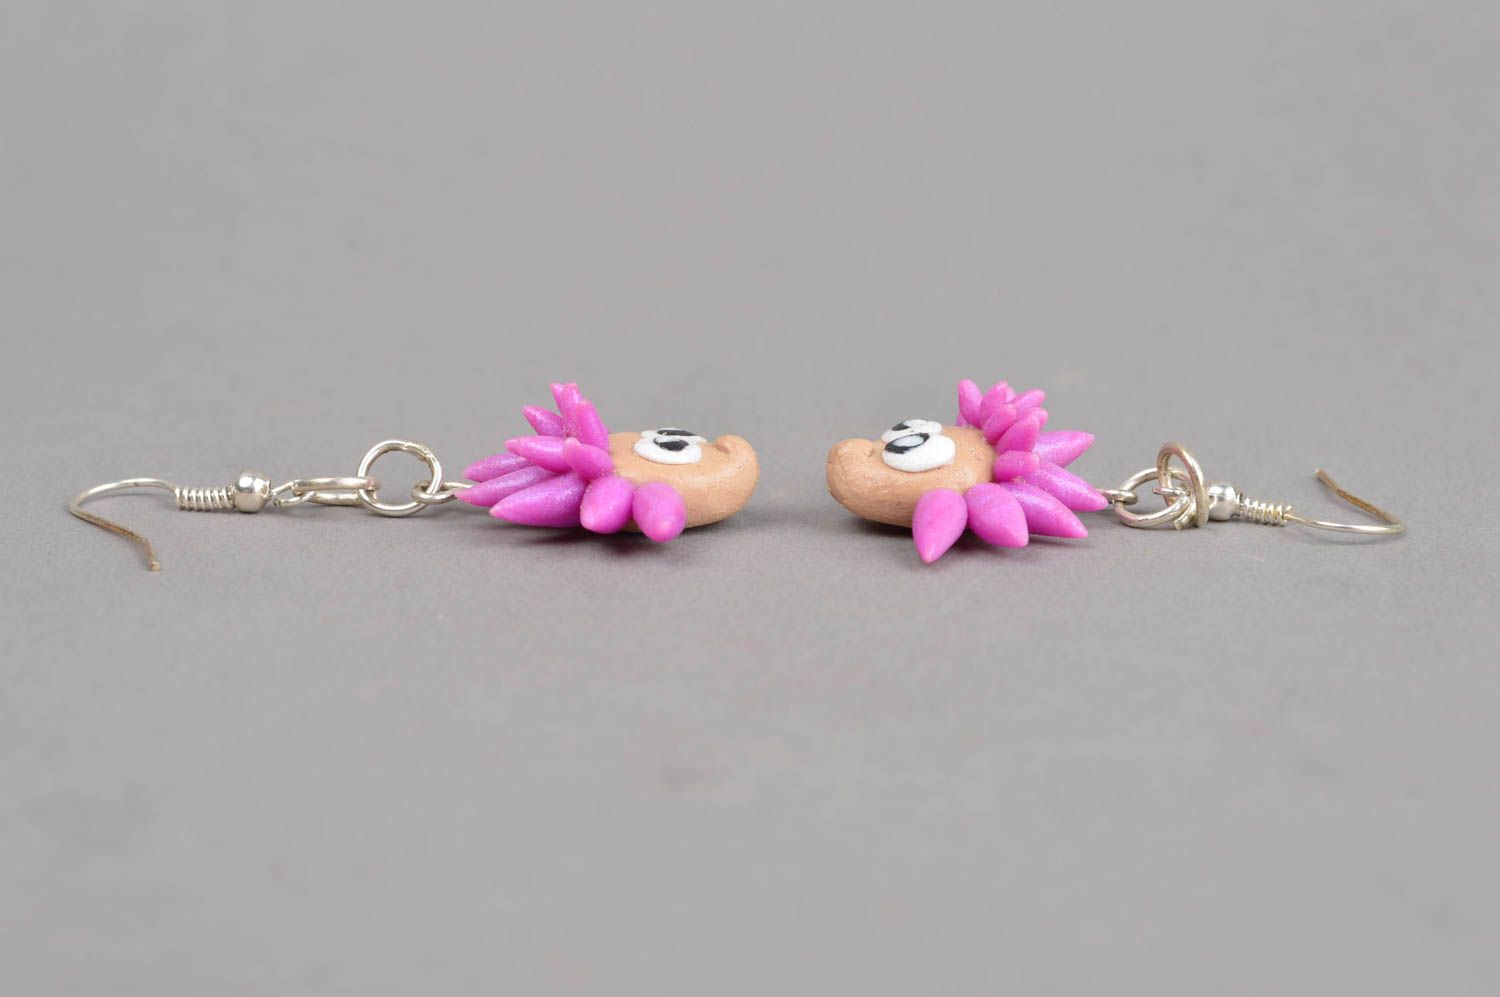 Small handmade plastic earrings artisan jewelry designs polymer clay ideas photo 3